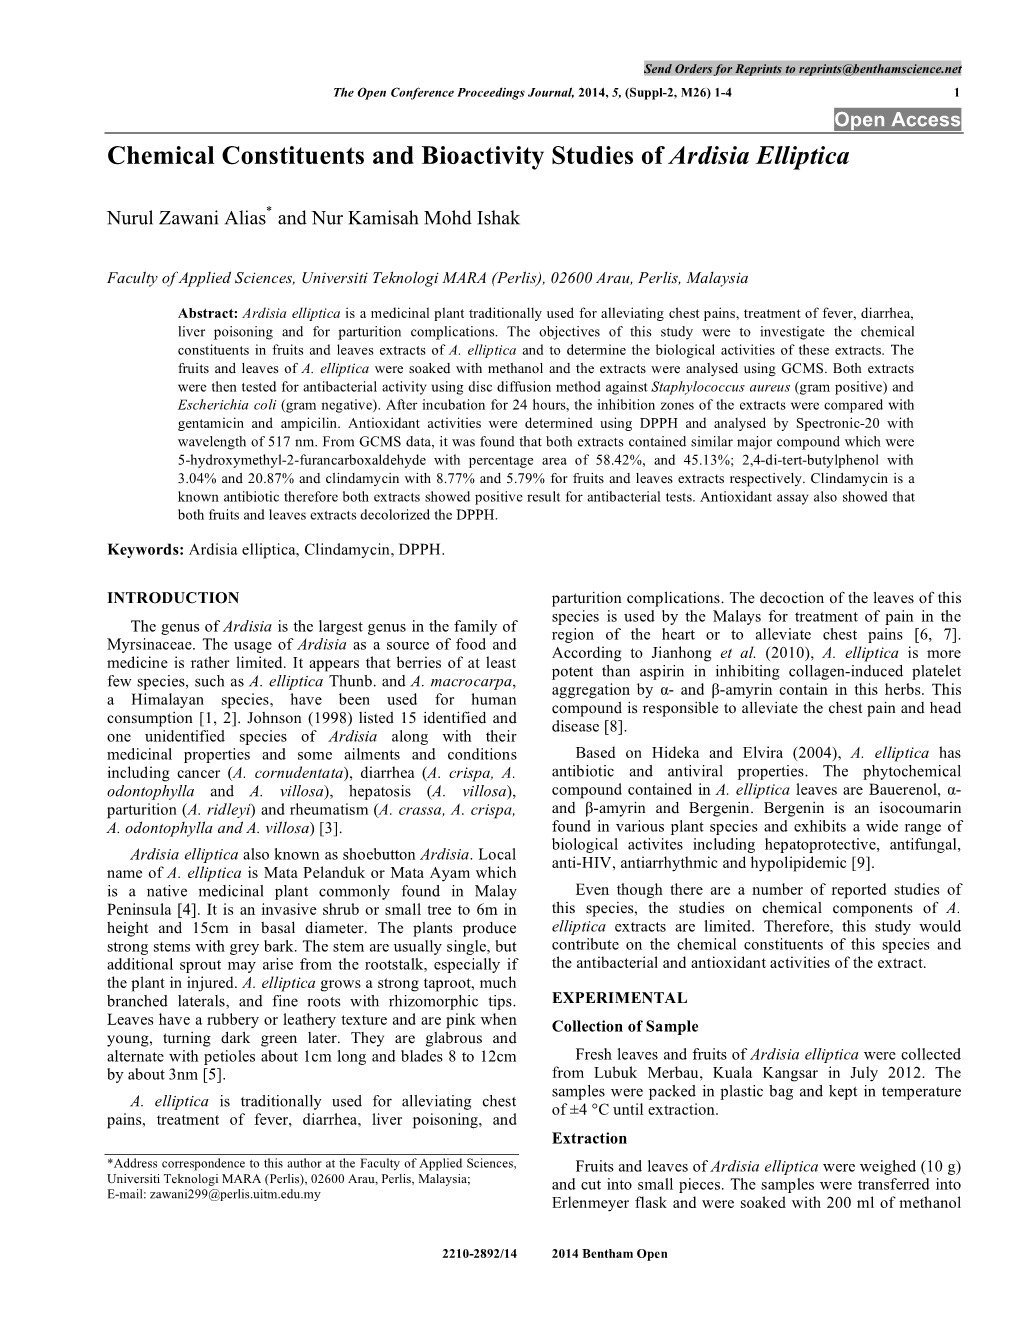 Chemical Constituents and Bioactivity Studies of Ardisia Elliptica